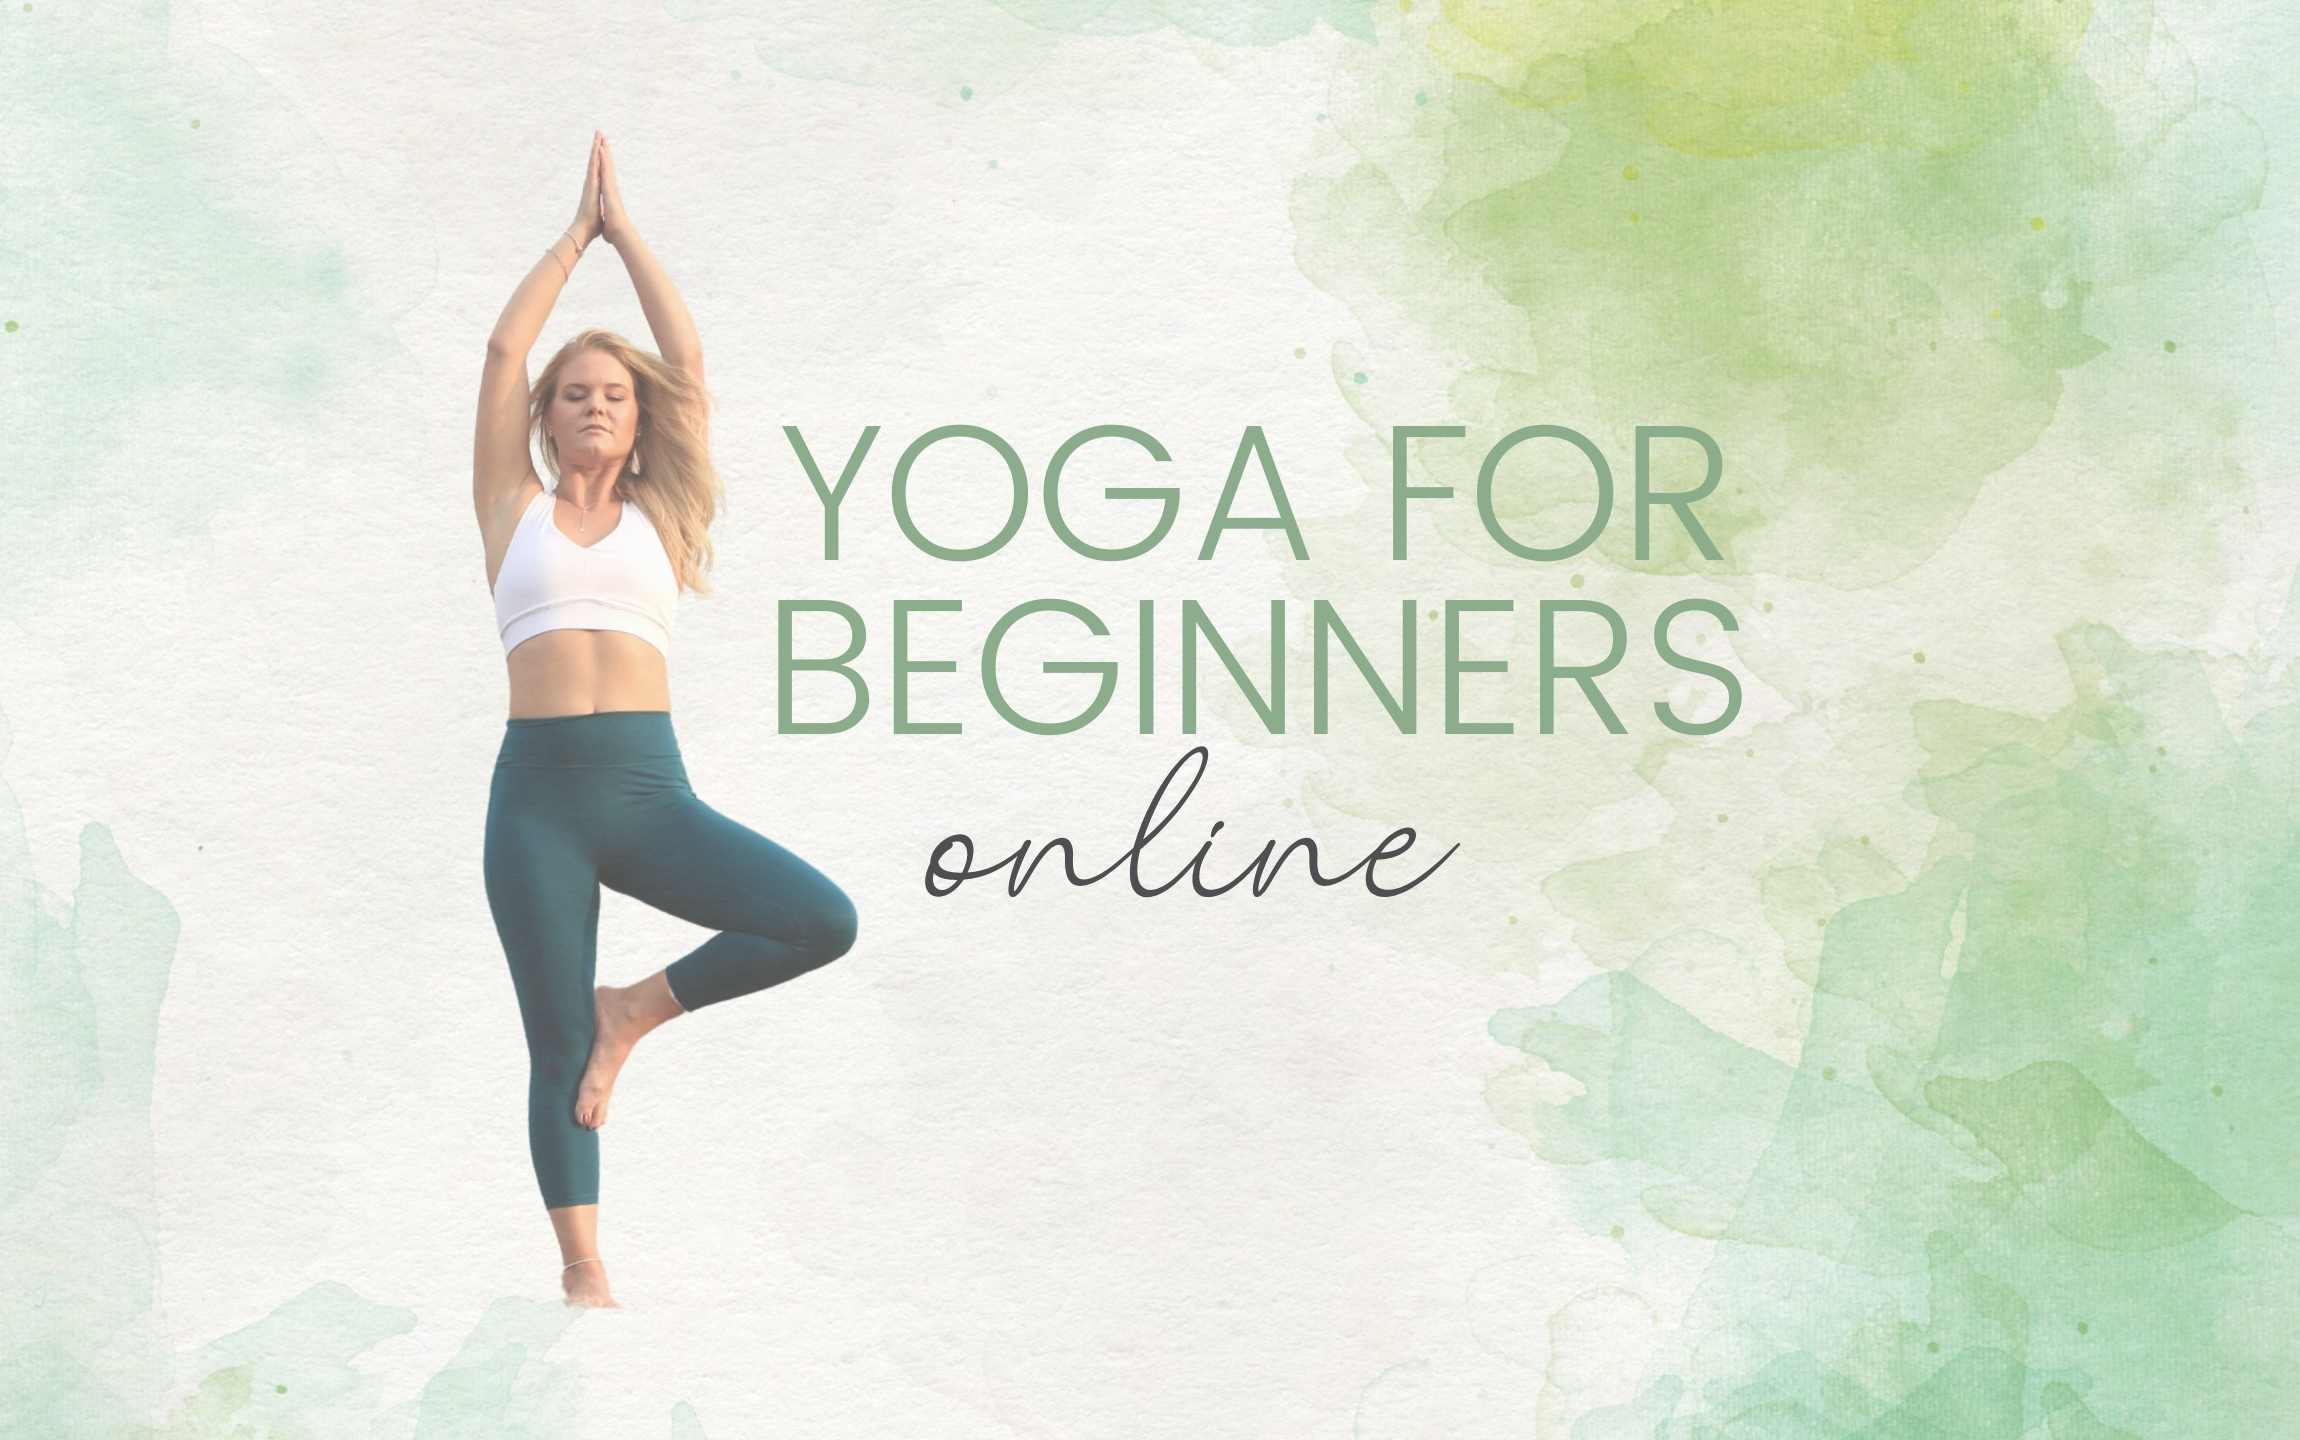 Yoga for Beginners by Melissa Burgard